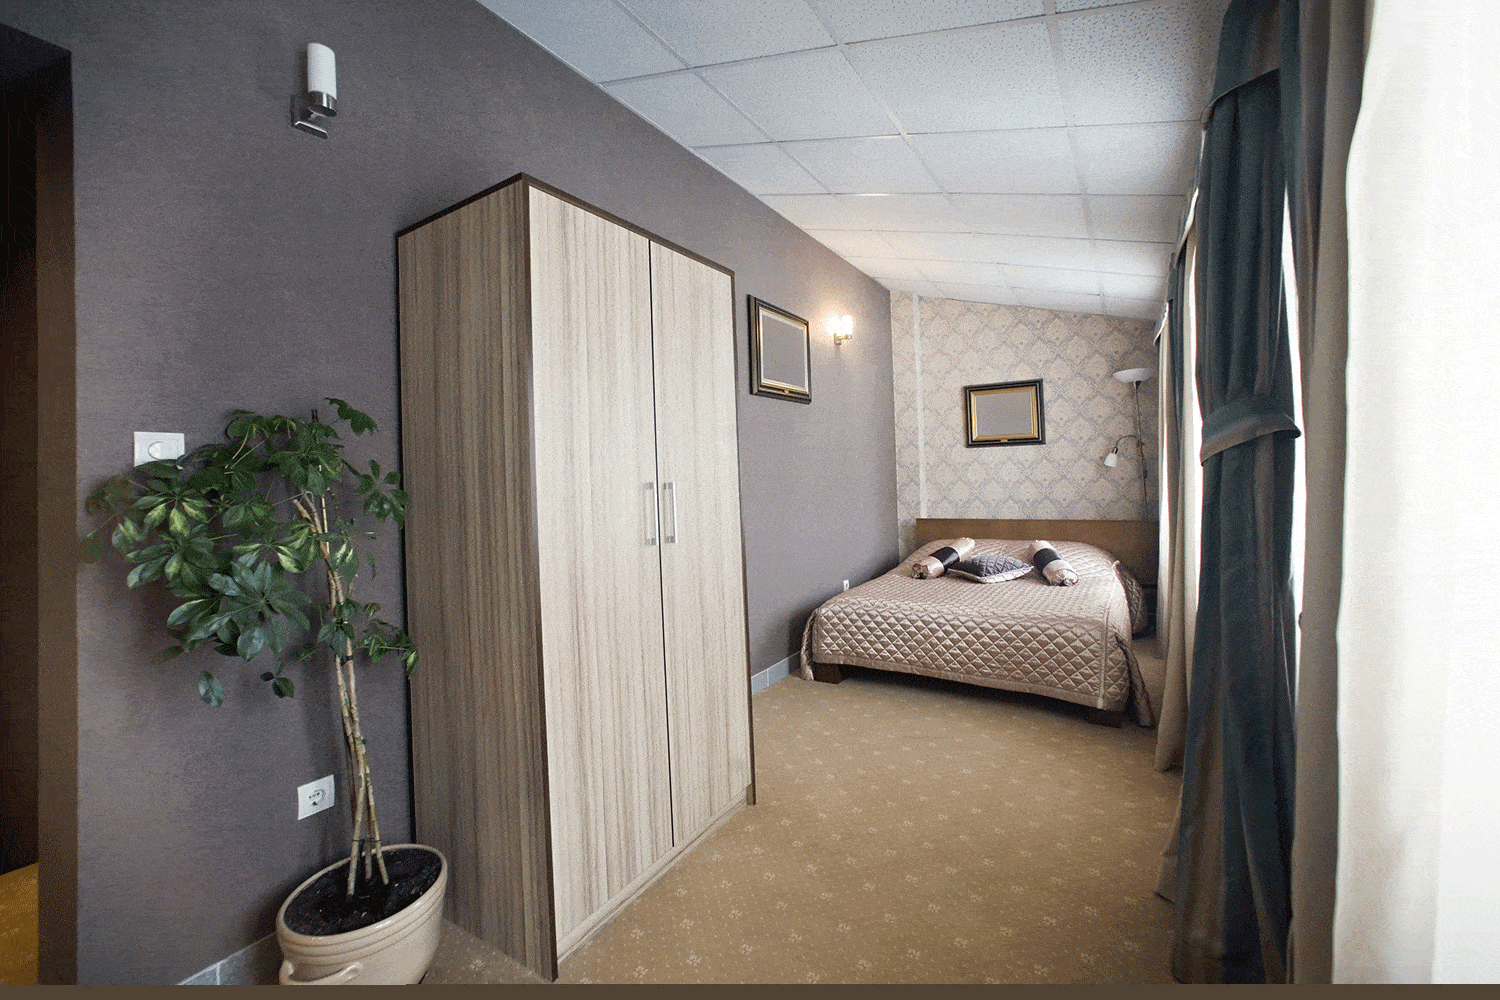 Classy bedroom with plant interior